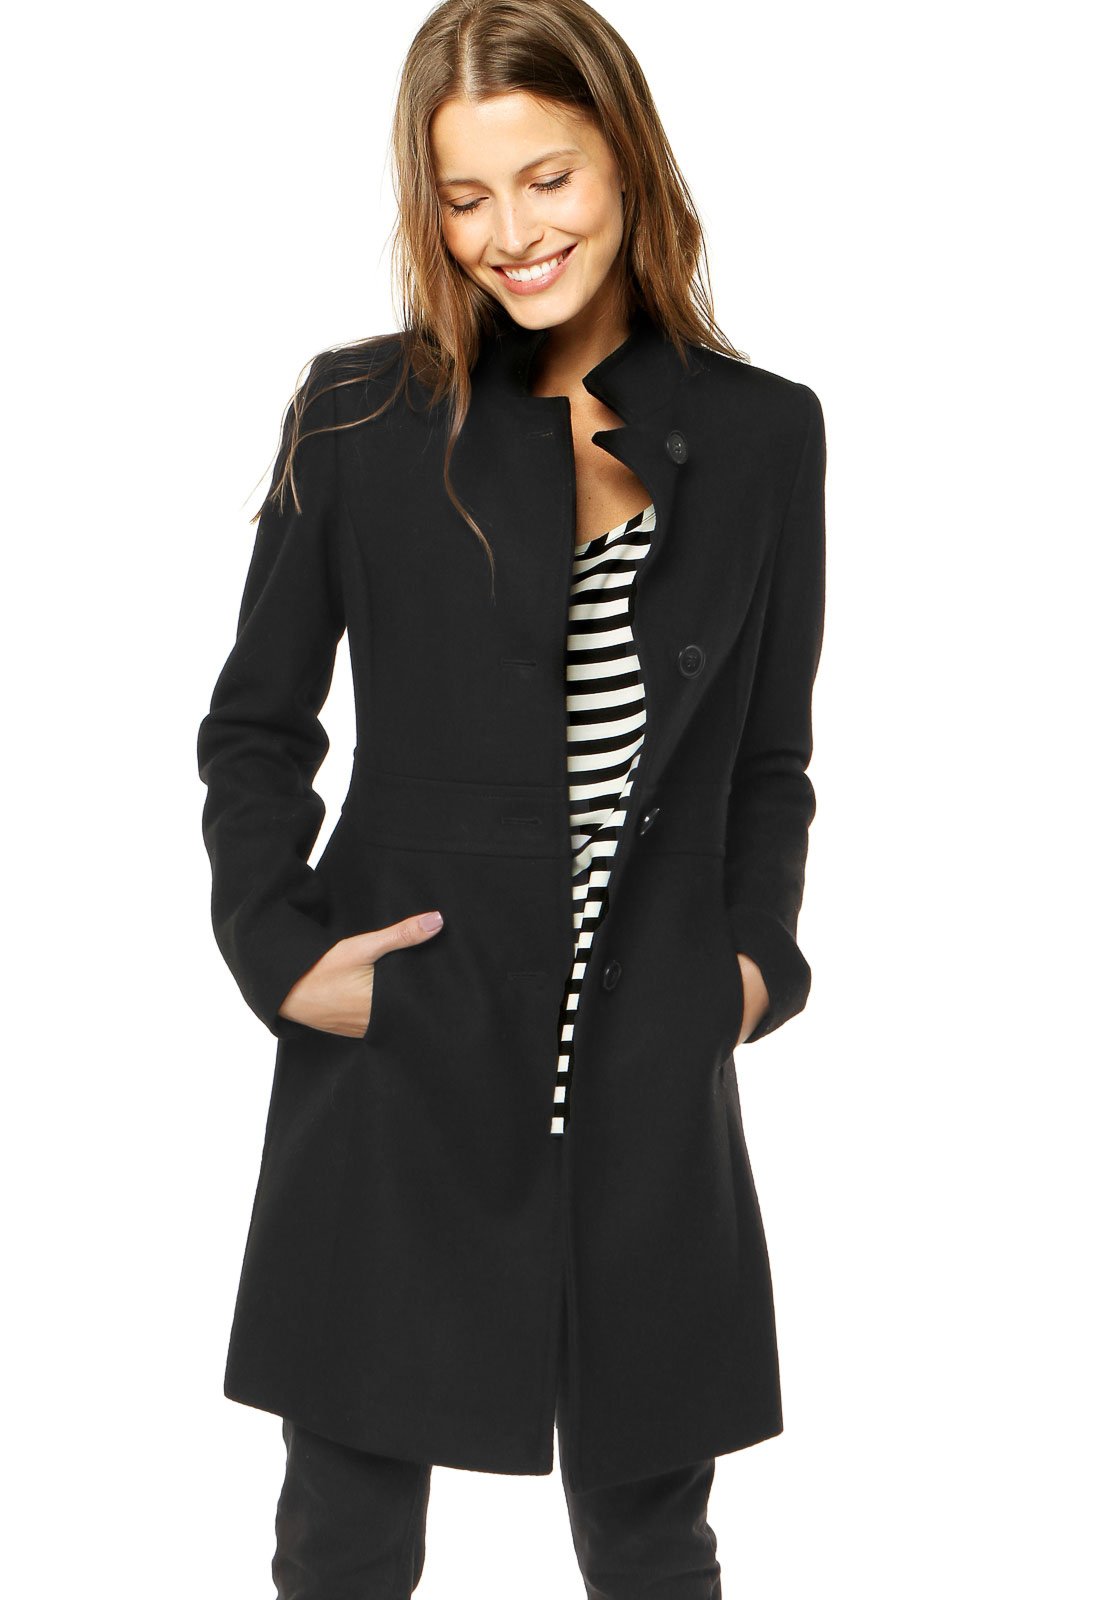 casaco preto longo feminino